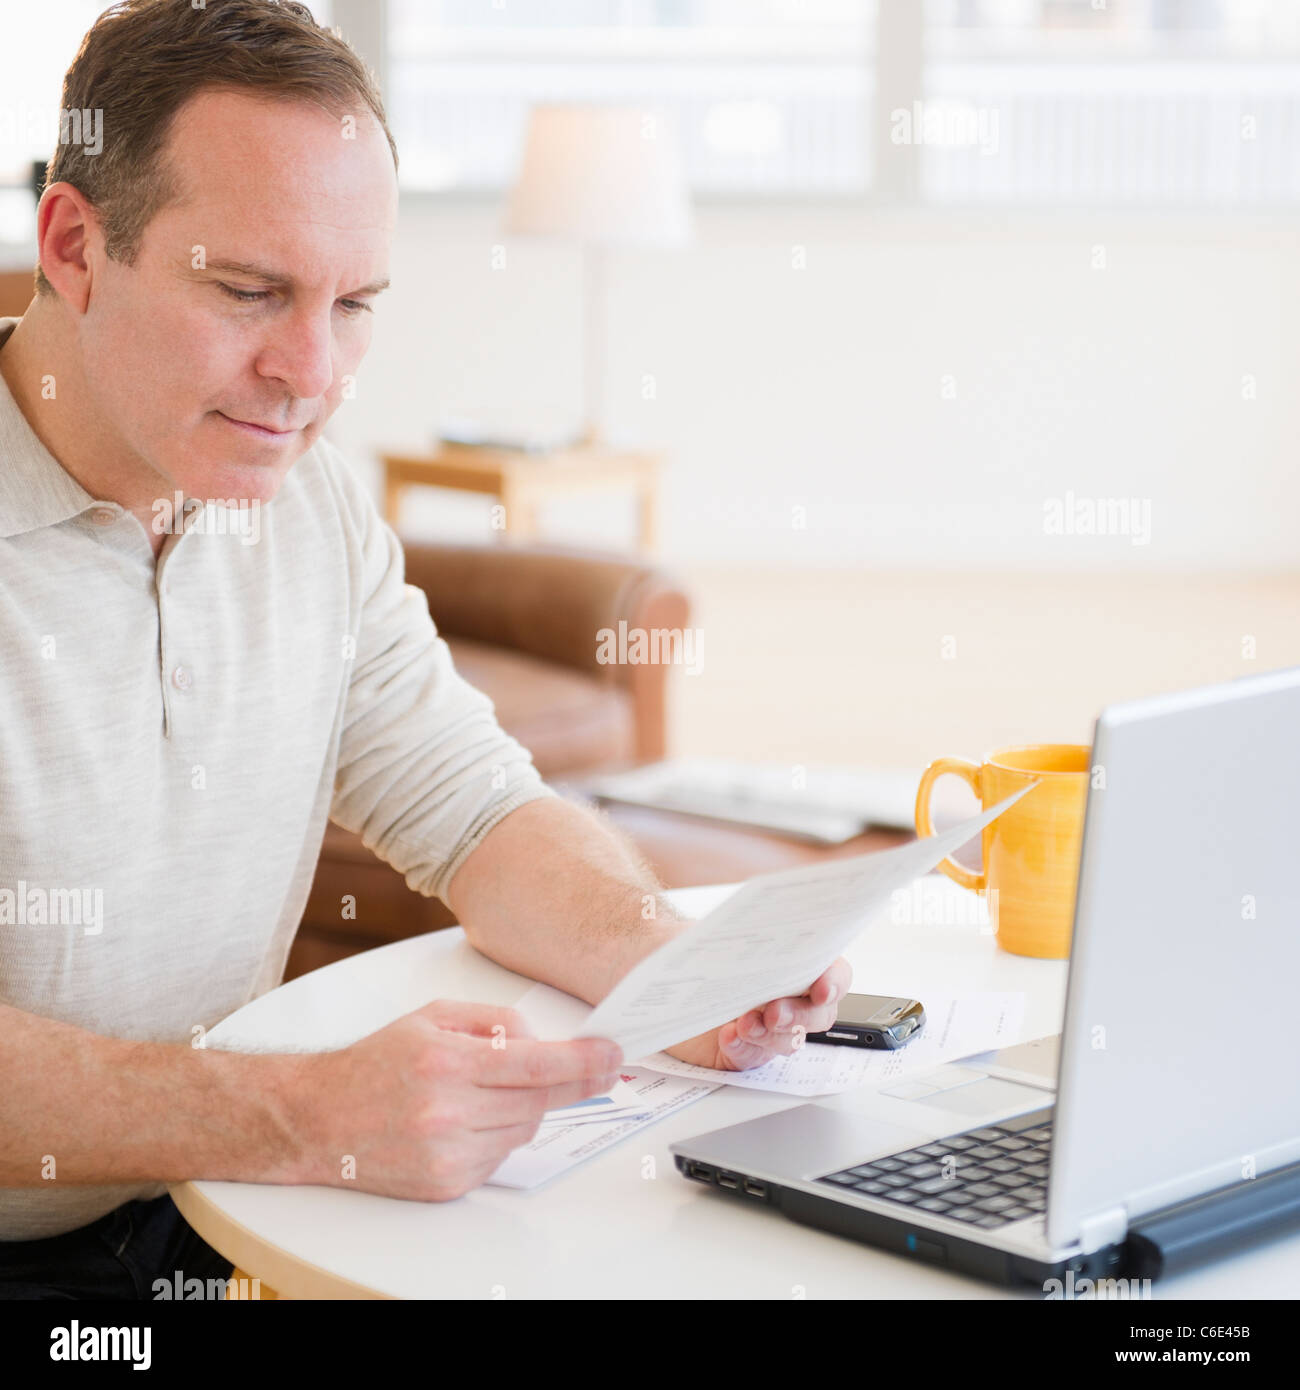 USA, New Jersey, Jersey City, Man doing paperwork Banque D'Images